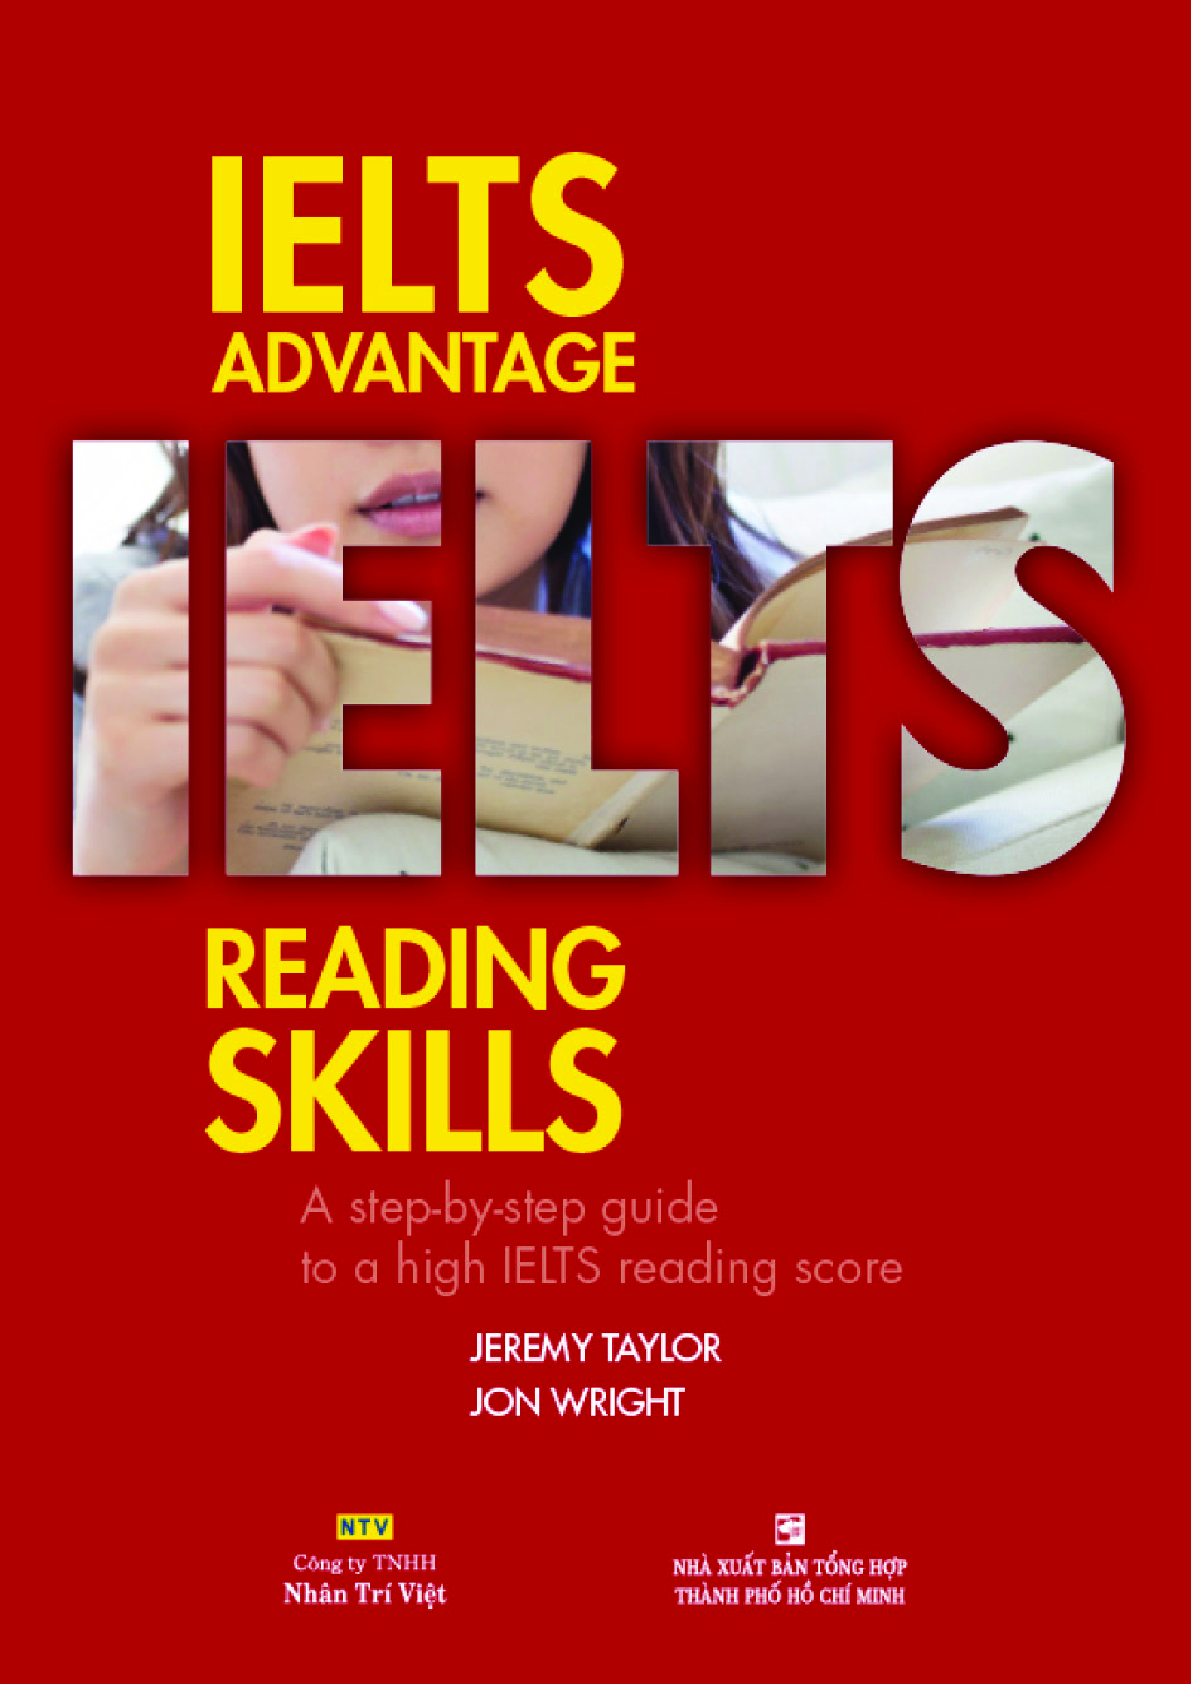 Sách IELTS Advantage Reading Skills pdf | Xem online, tải PDF miễn phí (trang 1)